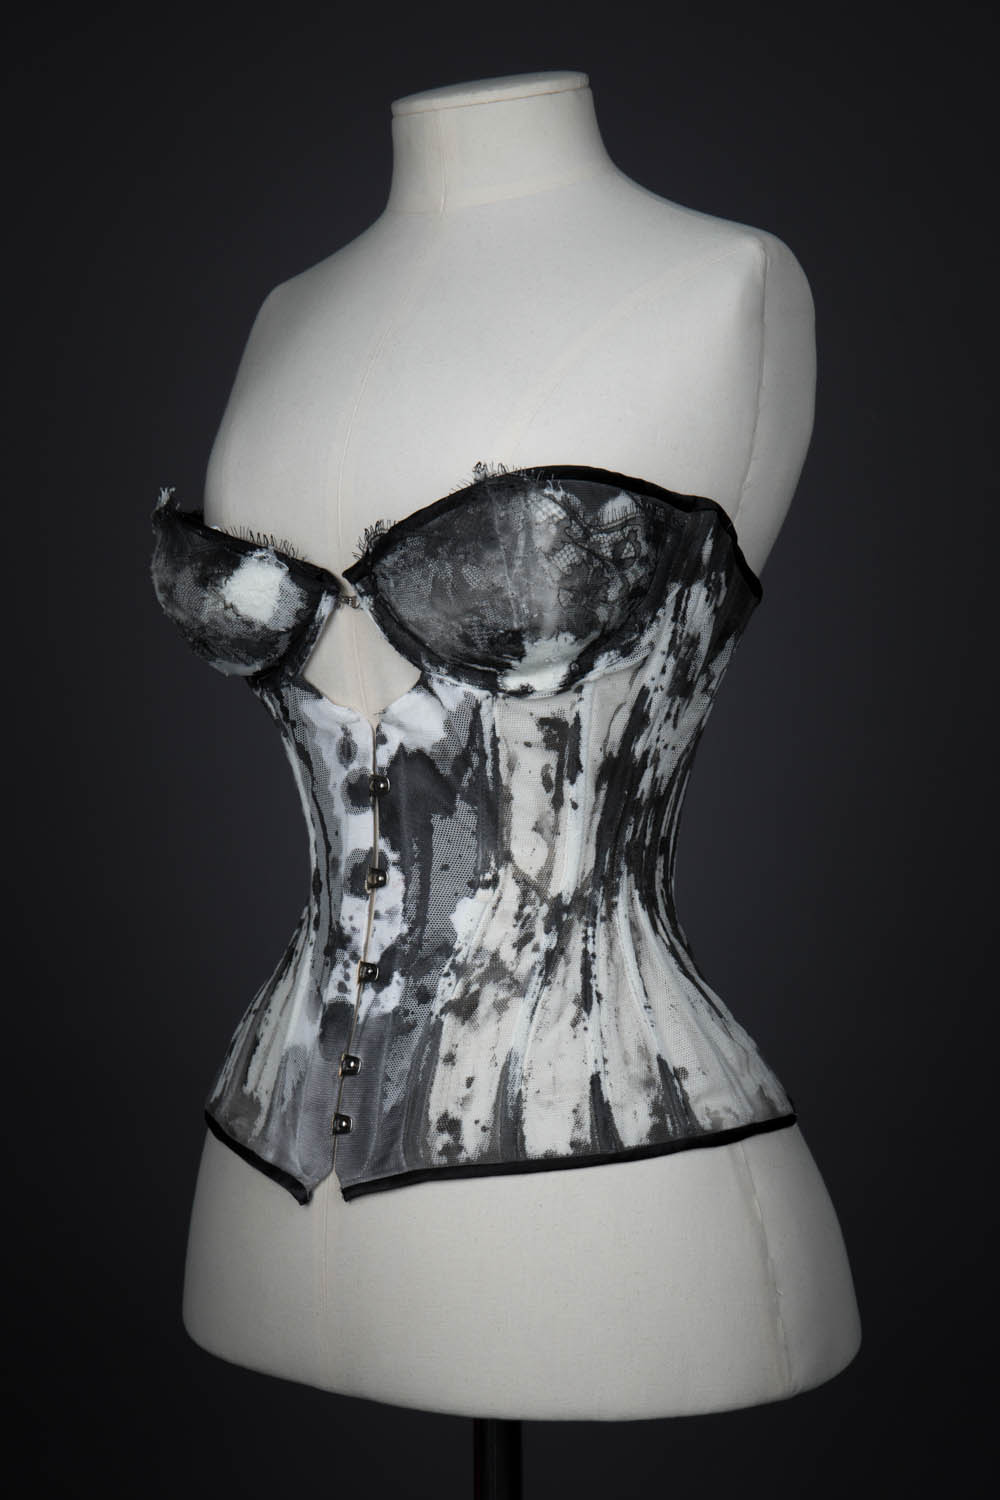 1920's brassiere - Caroline's corset blog